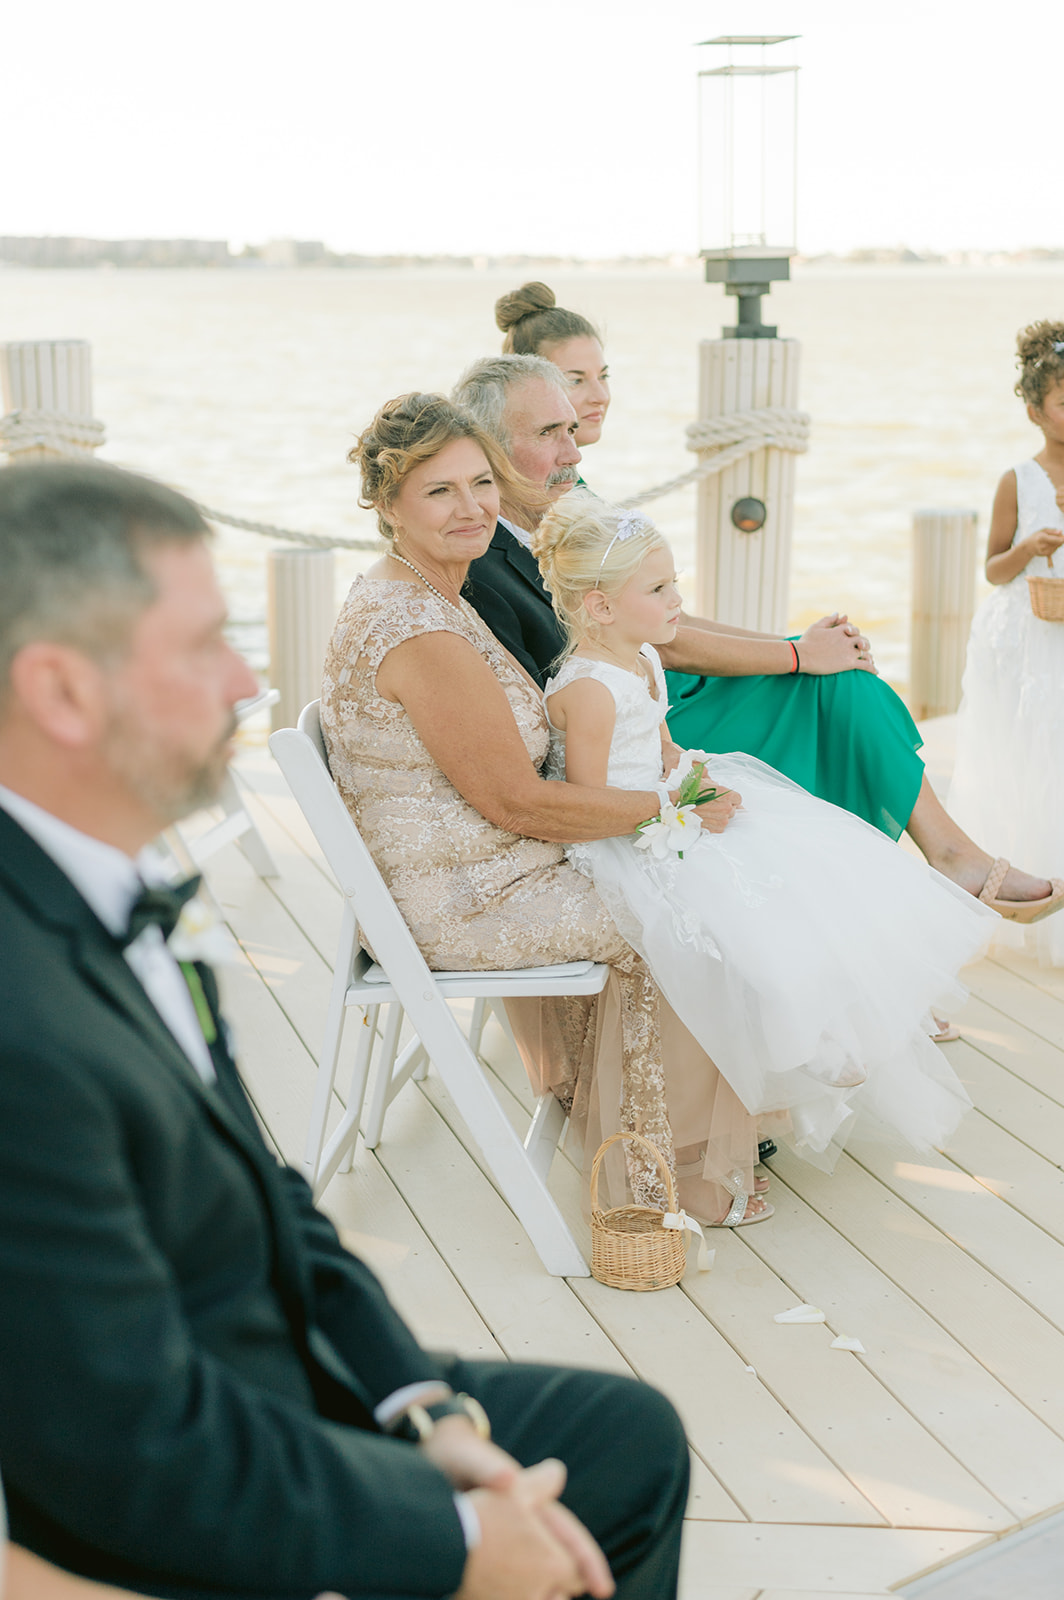 Stunning Beach Wedding Photography in Marco Island - Cherish Your Memories Forever
